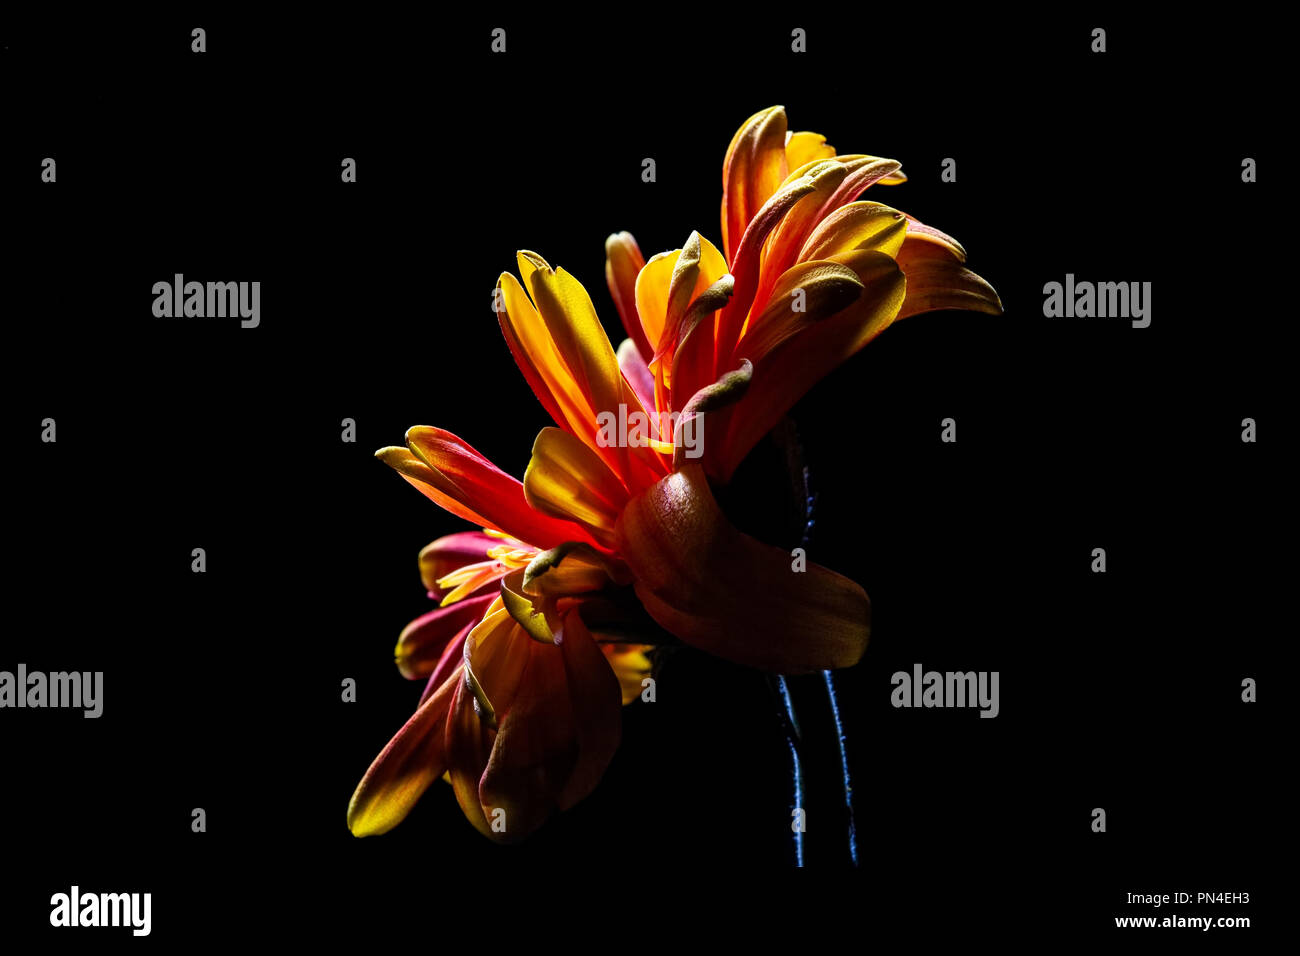 Glowing daisy flower closeup on black background Stock Photo